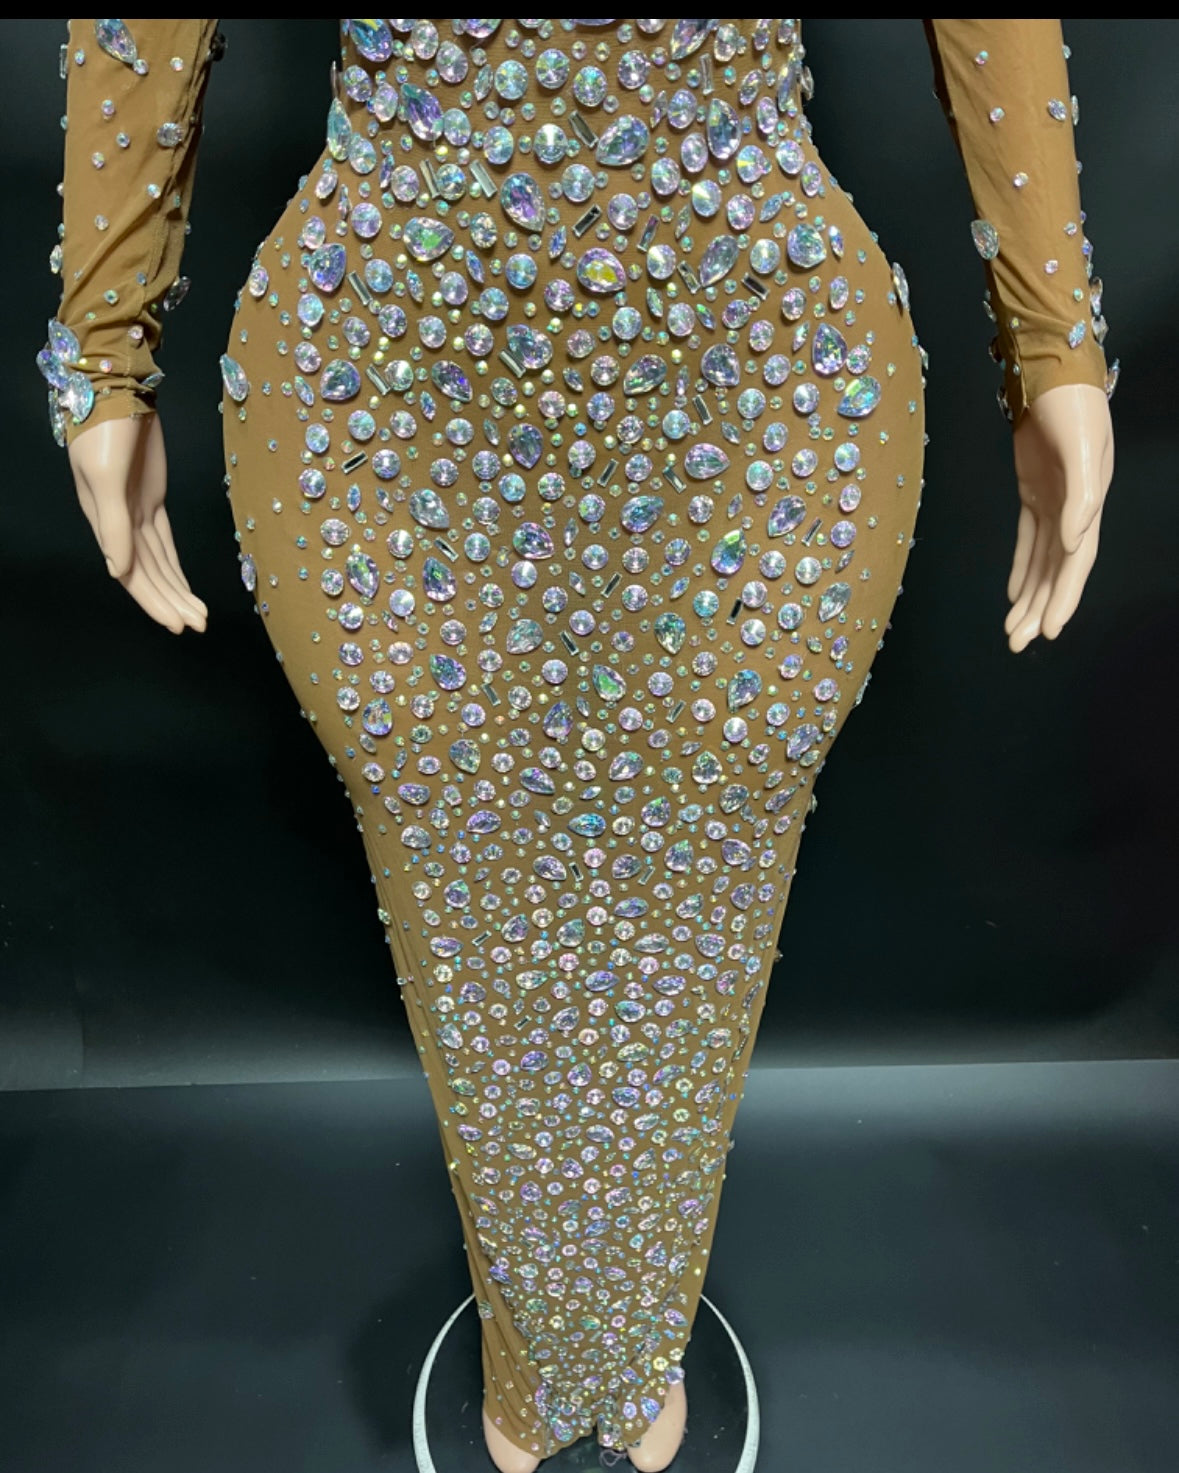 Iridescent Crystal Rhinestone LongSleeve High Neck Bling Gown